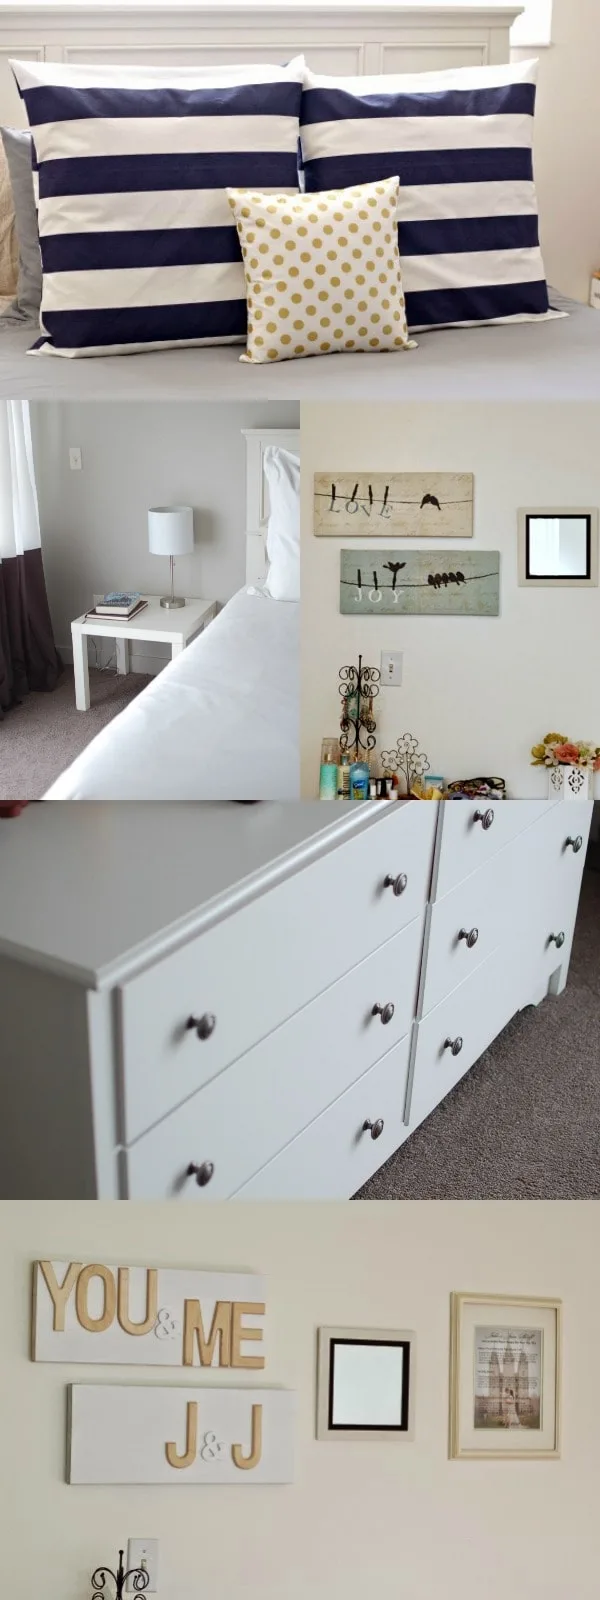 Bedroom decor collage before modern makeover